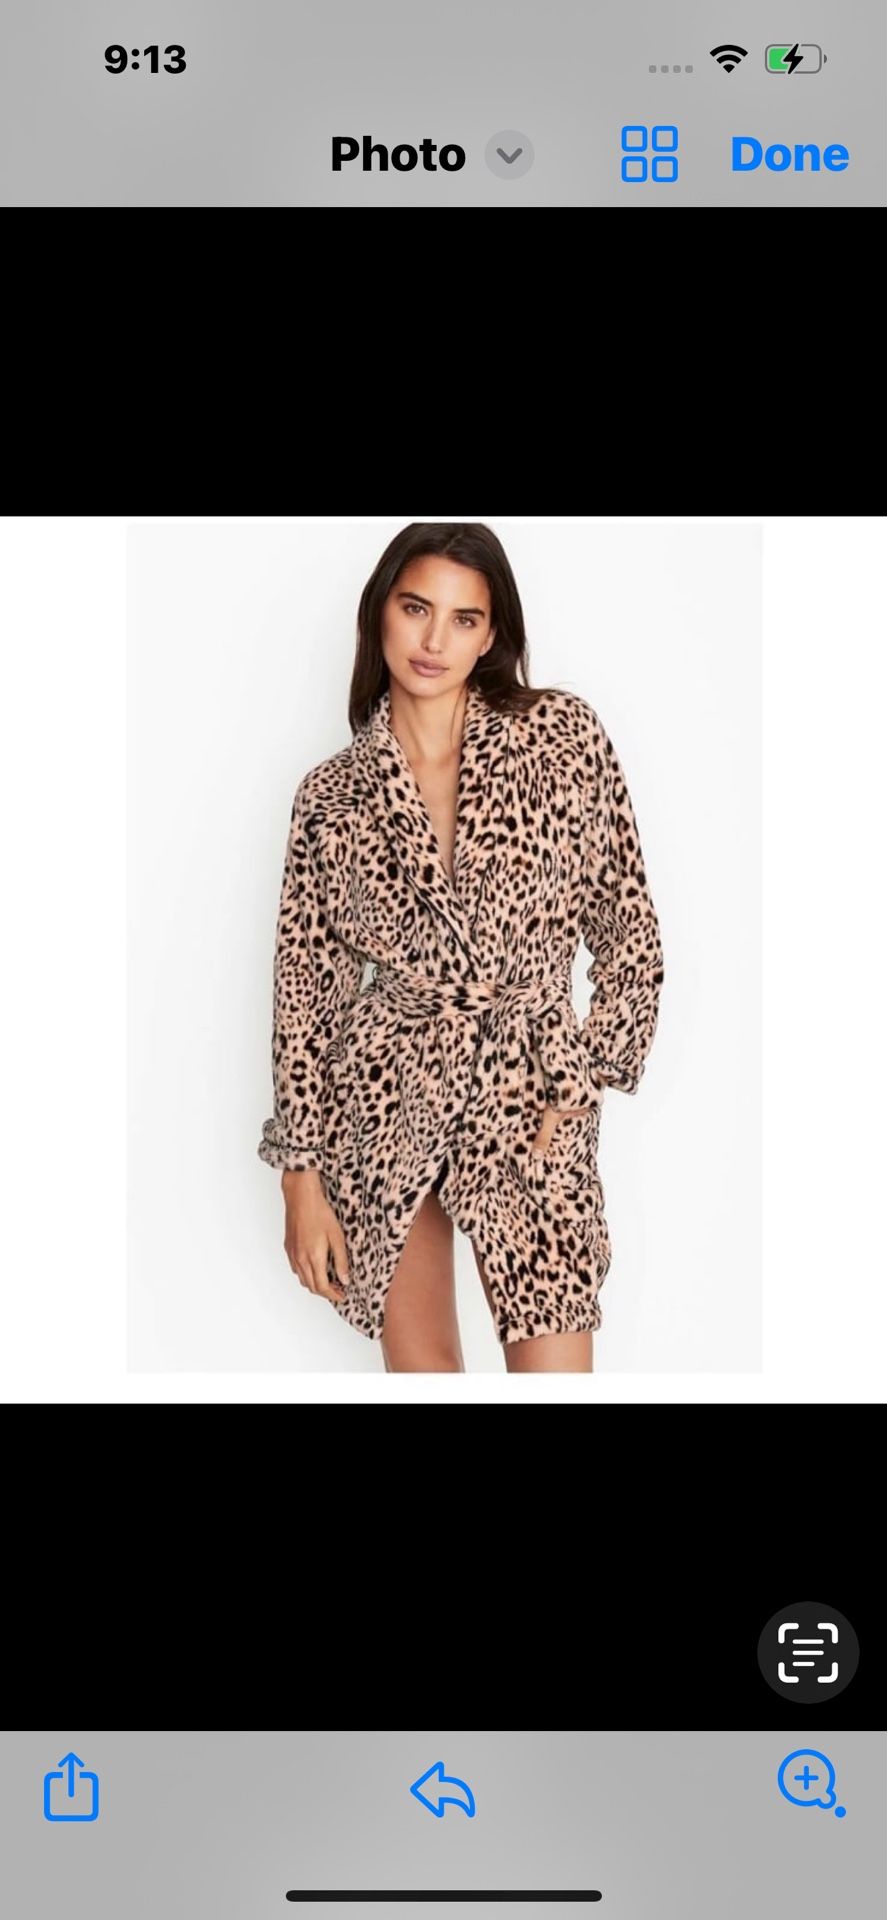 Victoria Secret Leopard Short Robe 